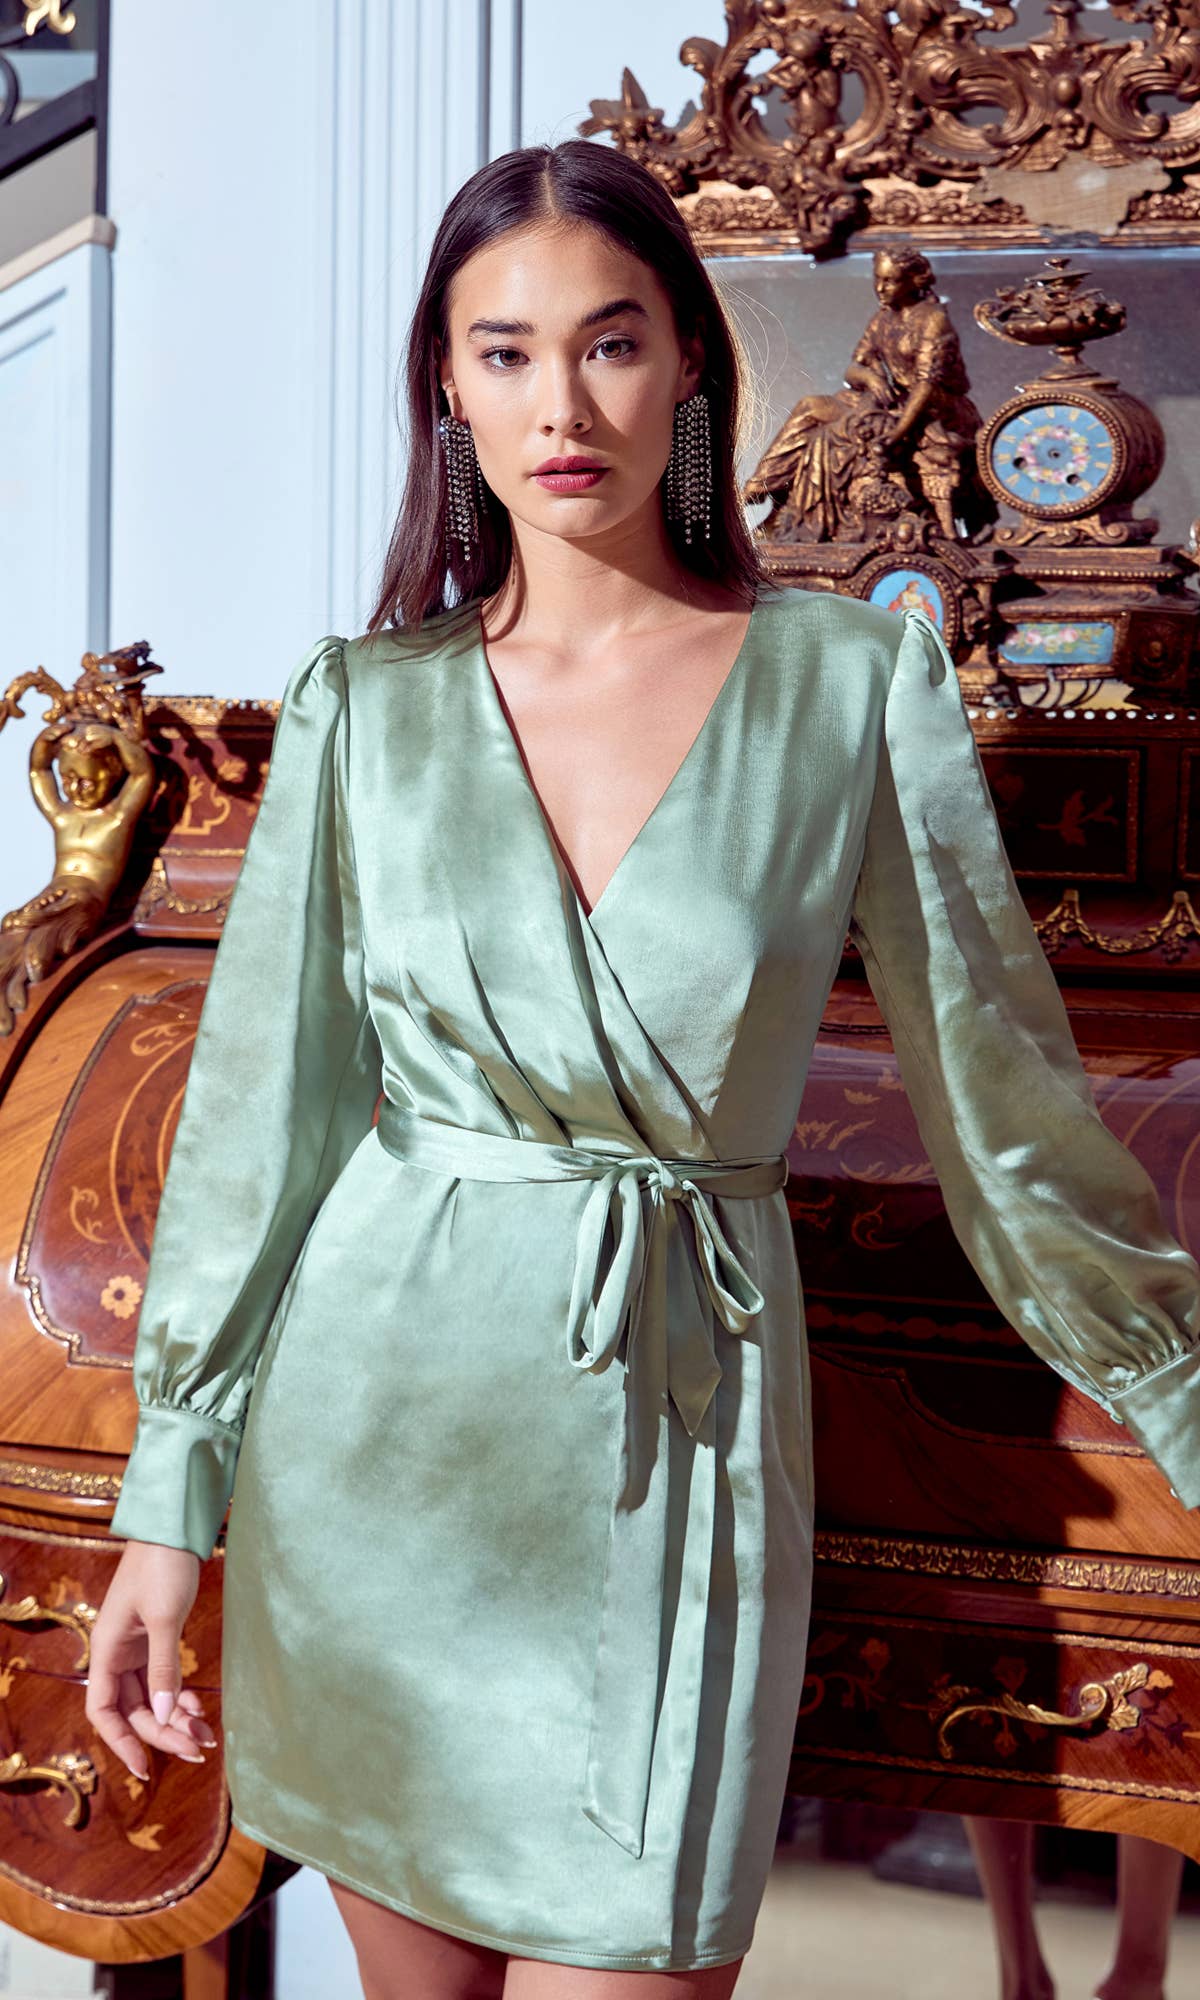 Fiona Satin “O” Ring Midi Dress, Greylin Collection – Greylin Collection